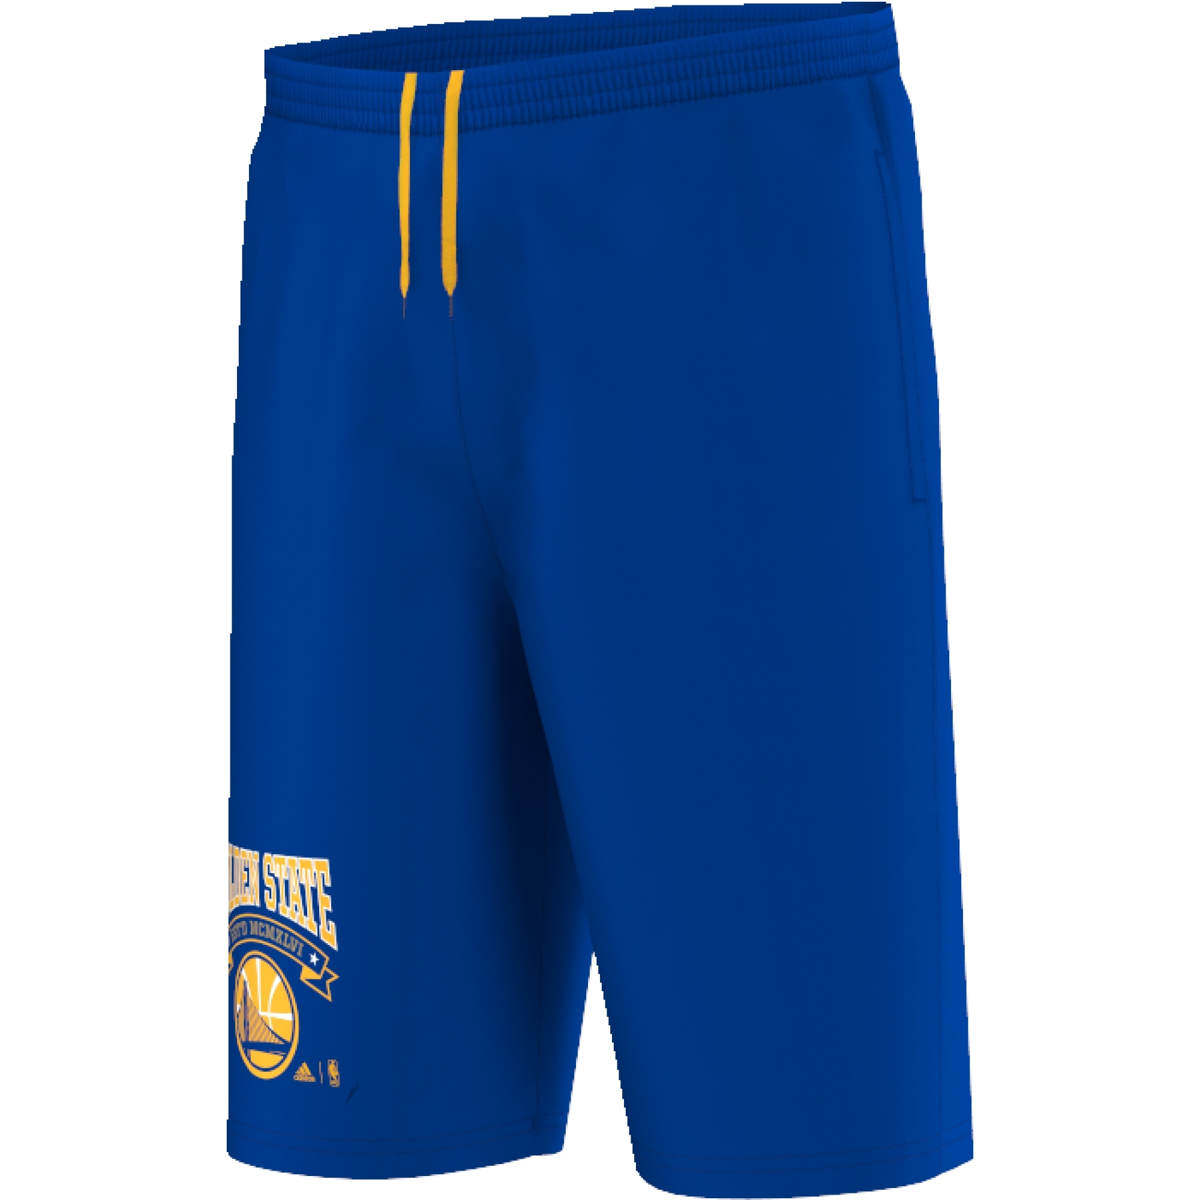 Adidas NBA Golden State Warriors Shorts - AX7626 | Basketball Clothing ...